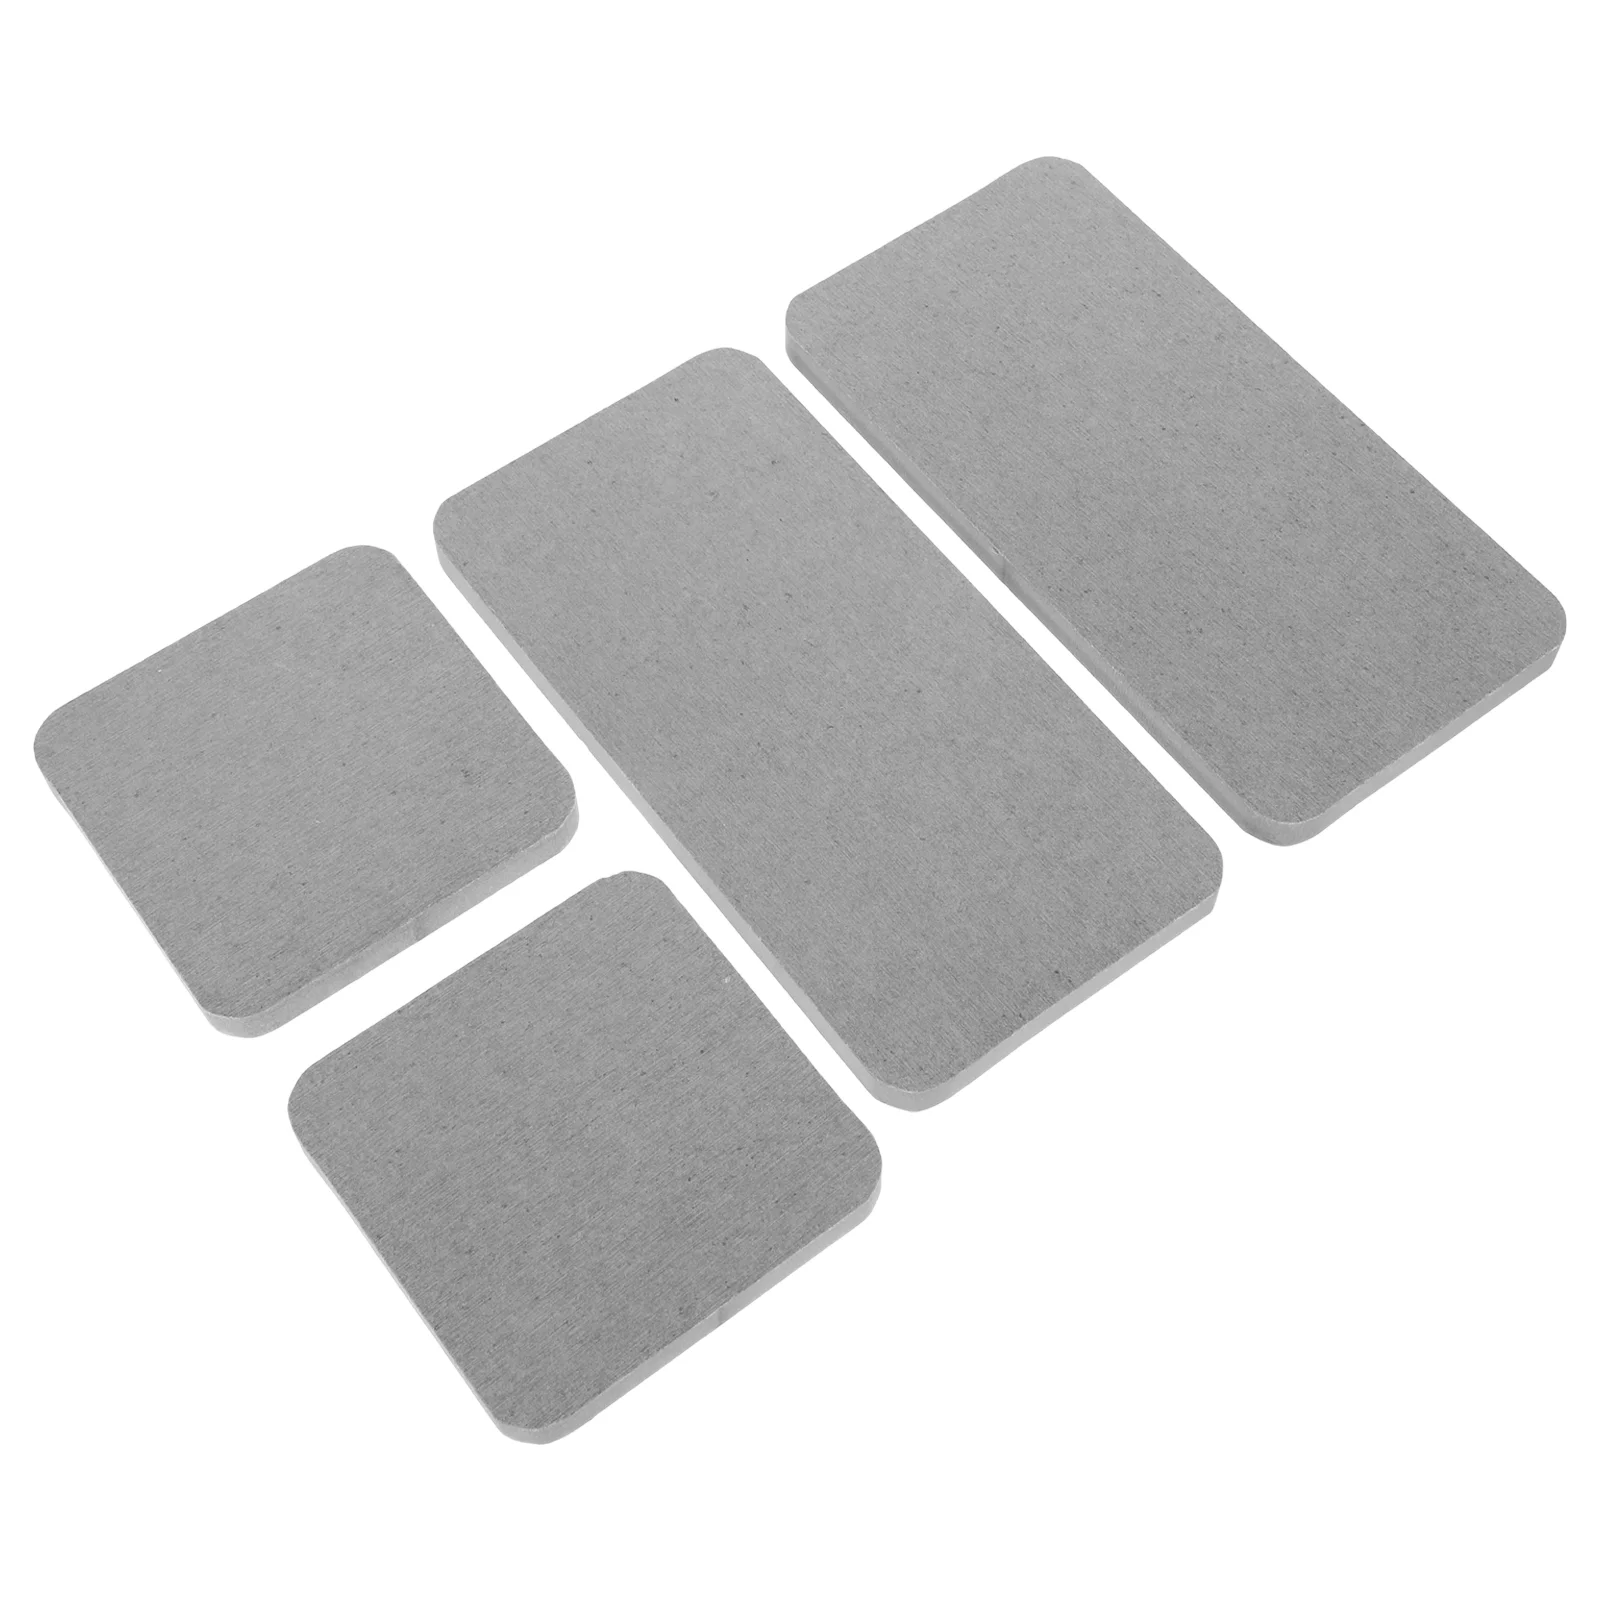 

4 Pcs Desktop Absorbent Coaster Coasters Drinks Diatomite Mat Soap Pad Mud Cup Cushion Bathroom Countertop Holder